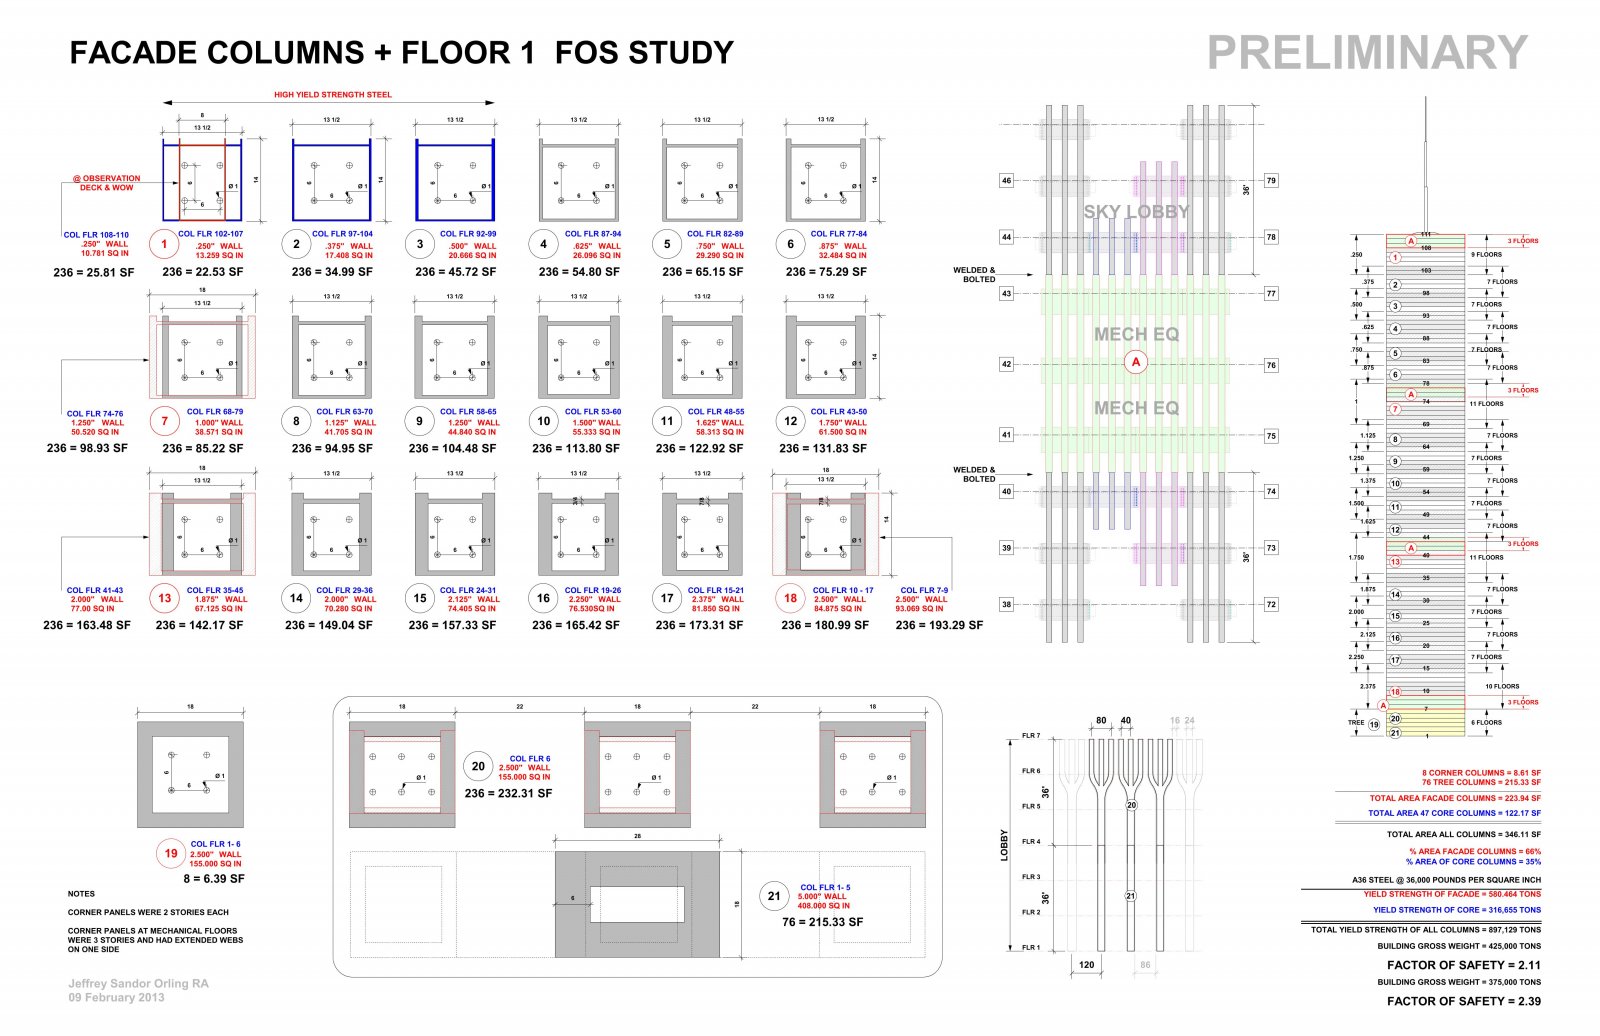 FOS Study 2013_page1.jpg